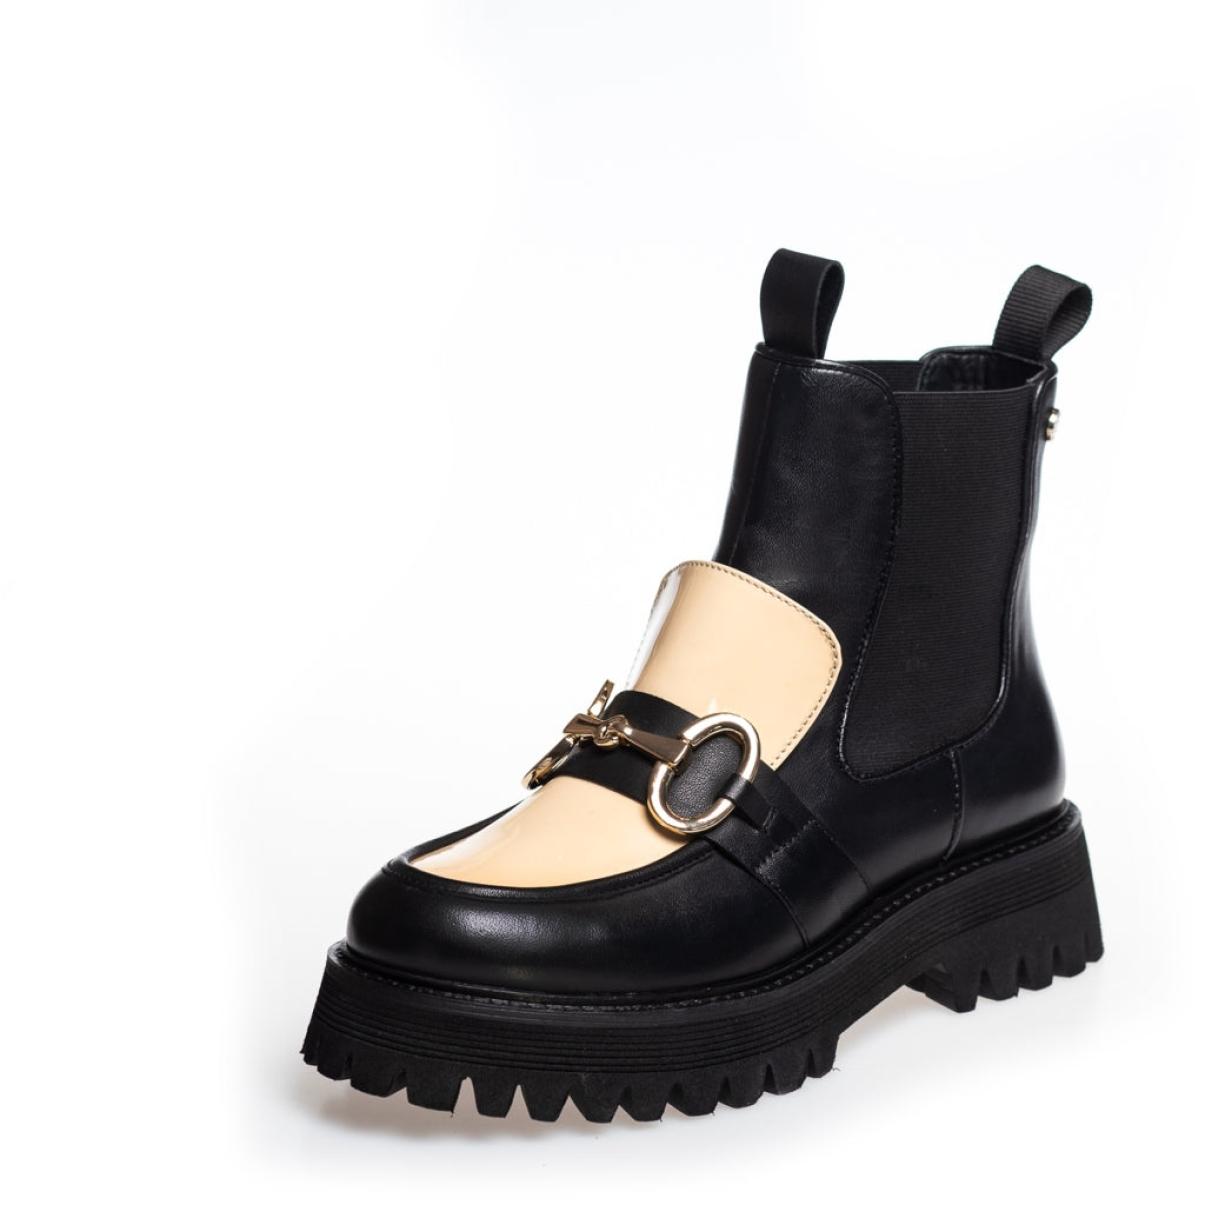 Copenhagen Shoes Women All I Want Multi - Black/Beige Ankle Boots Sale - 1